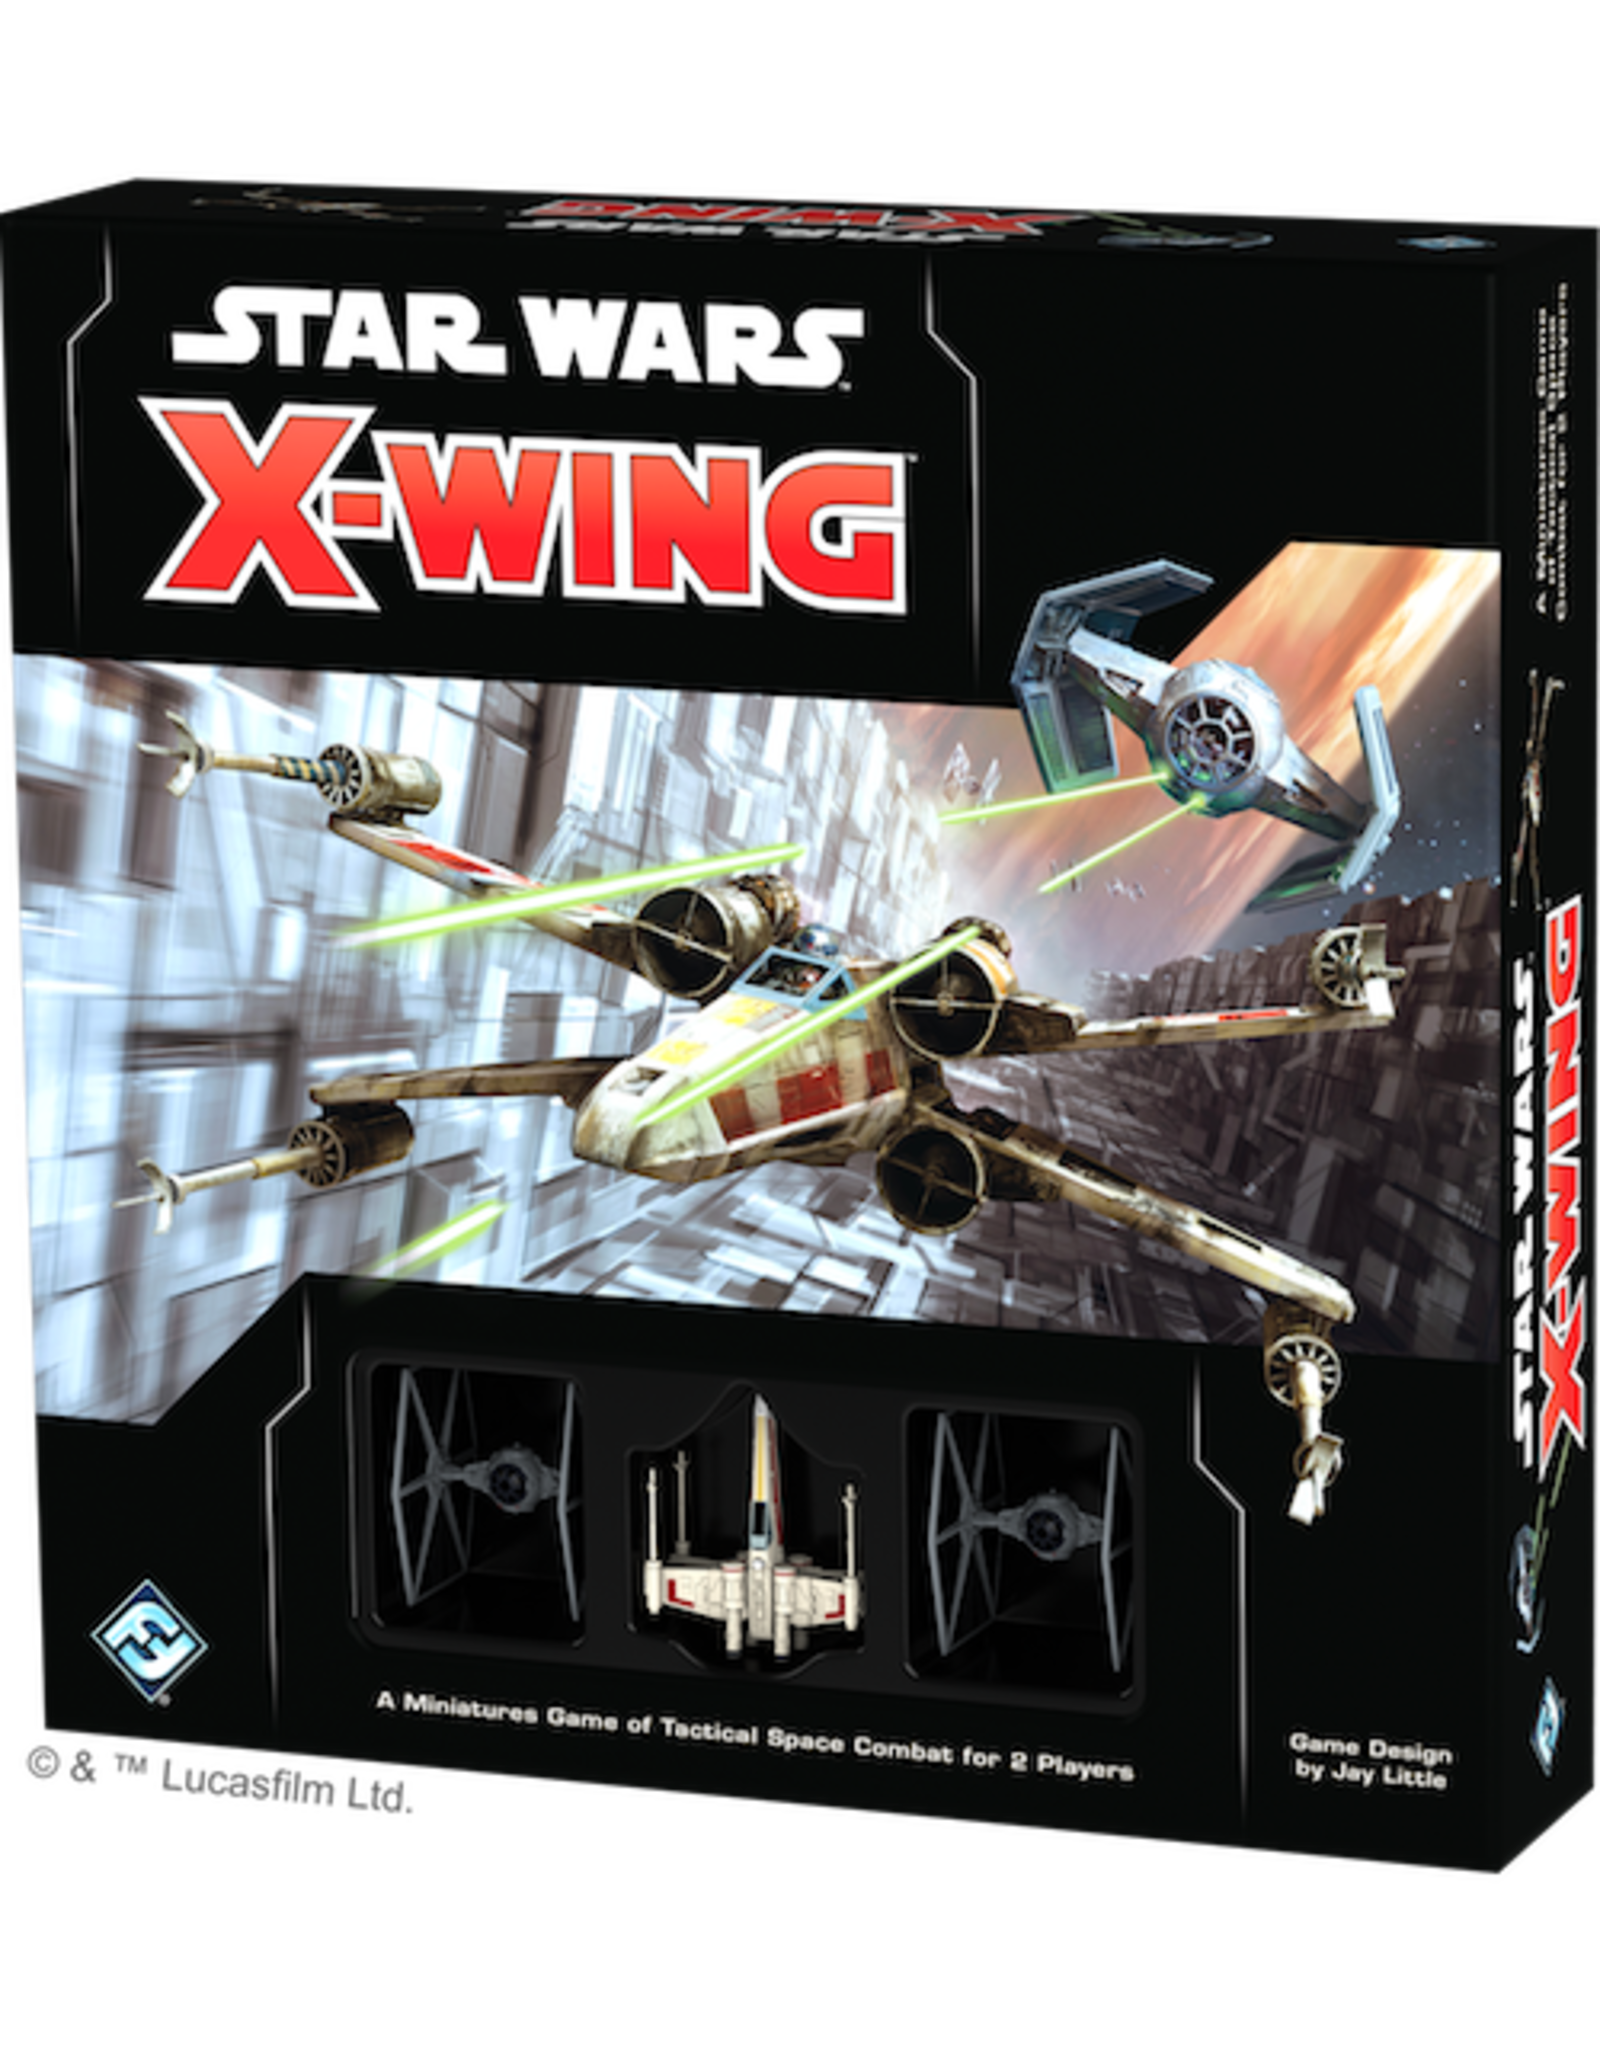 Fantasy Flight Games Star Wars X-wing 2E: Core Set